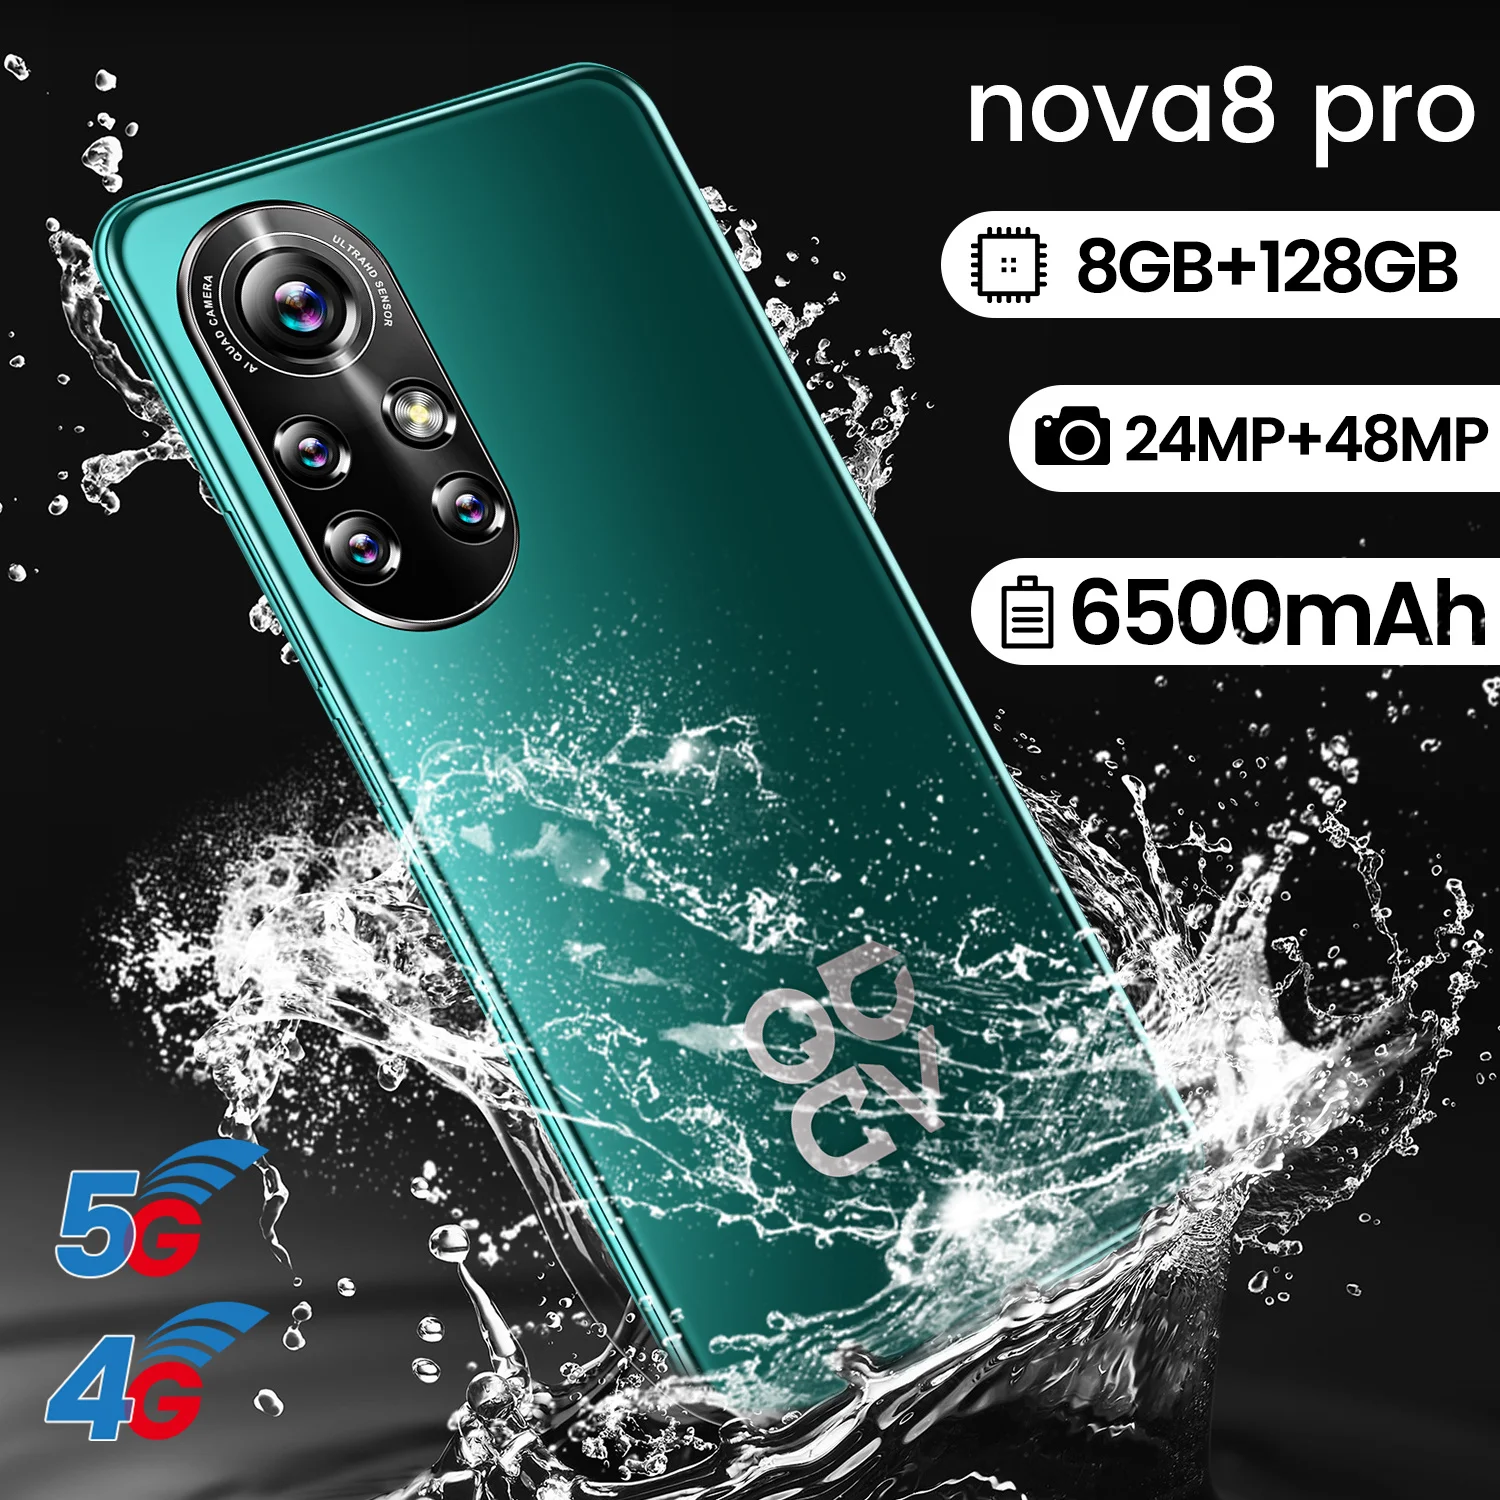 

Nova8 Pro Andriod Phone Global Version 8GB RAM 512GB ROM 11 Core 24+48MP 5G Smartphones 6.8 Inch 6500mAh Qualcomm Snapdragon 888